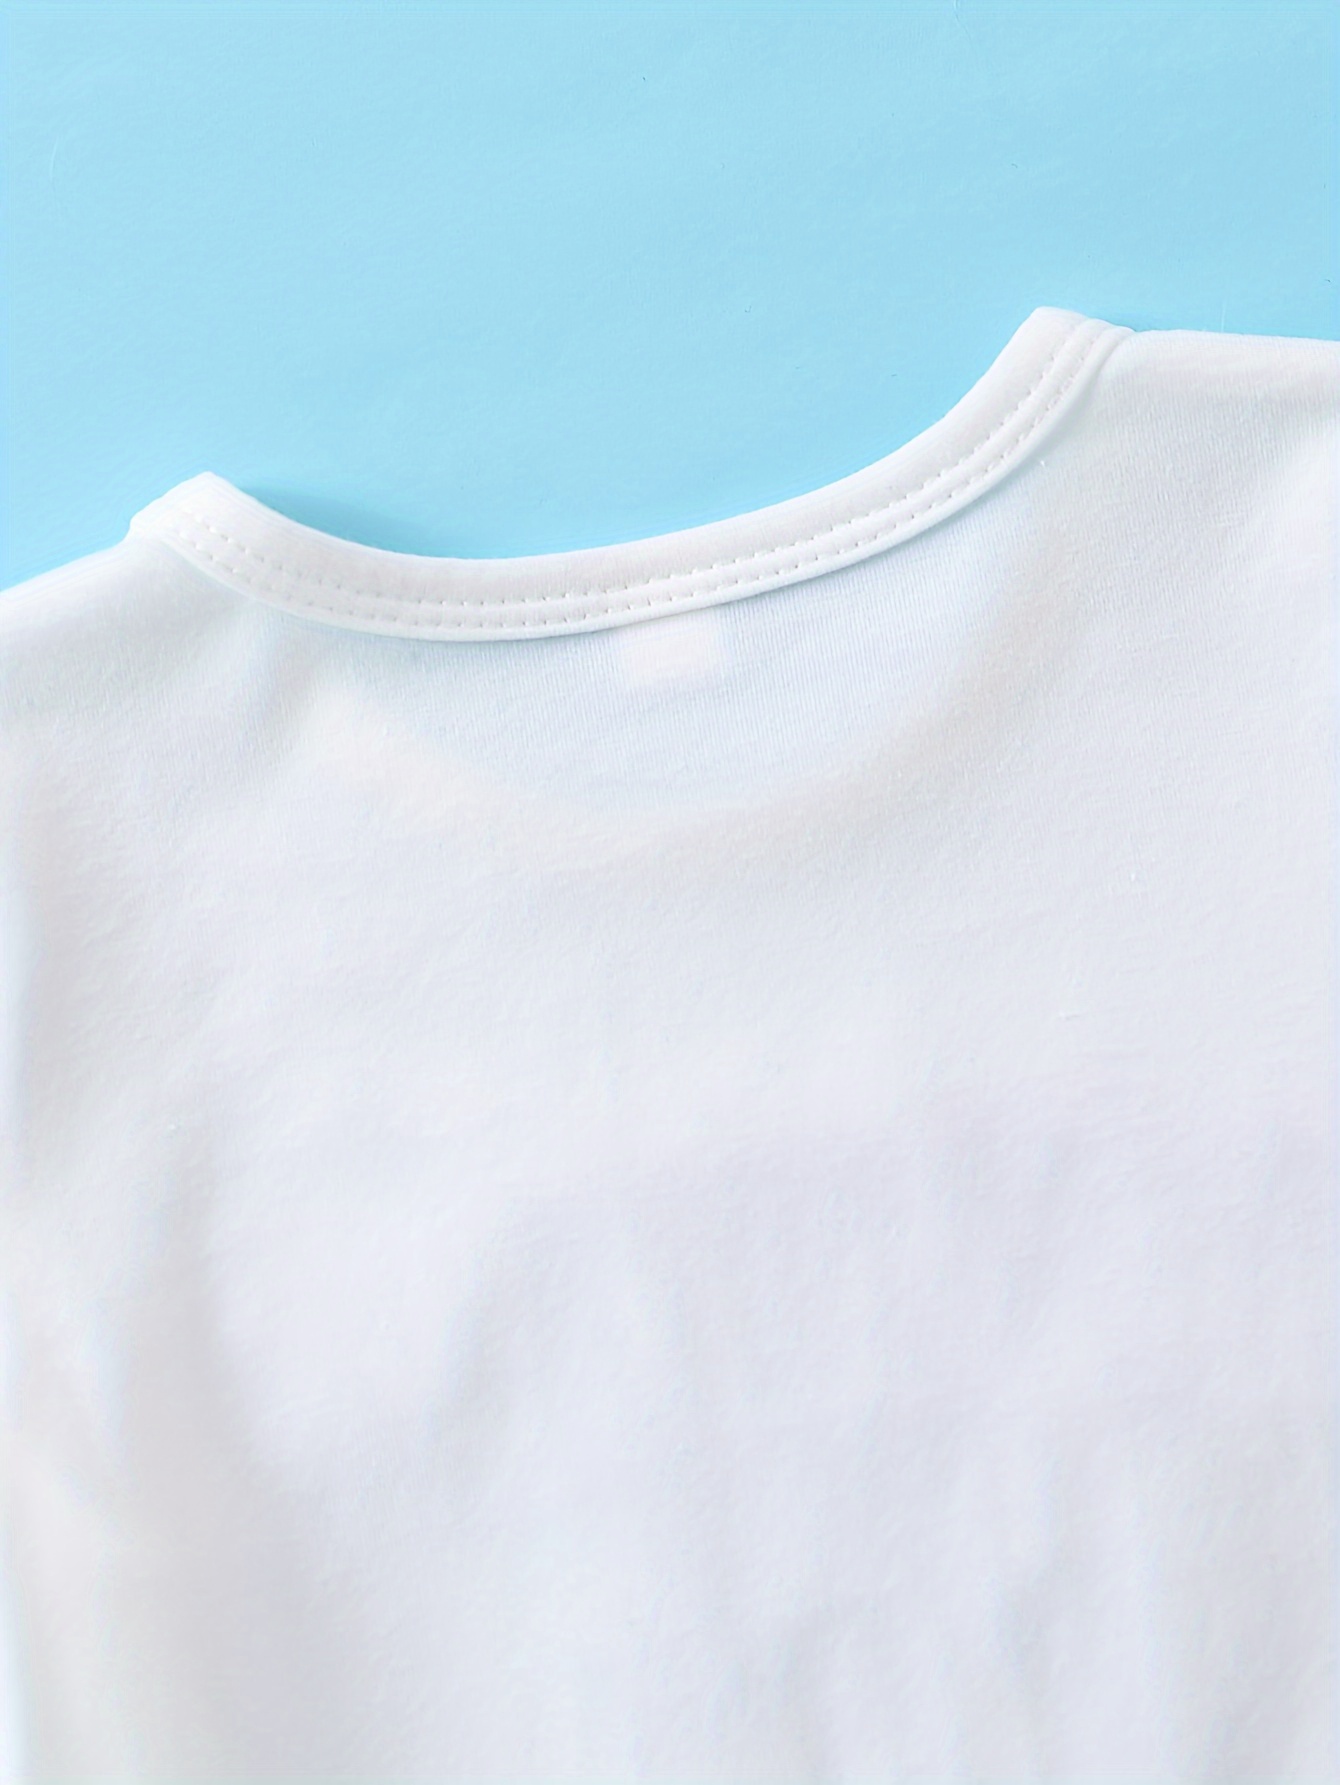 Buy LIFE White Printed Cotton Round Neck Girls T-Shirt